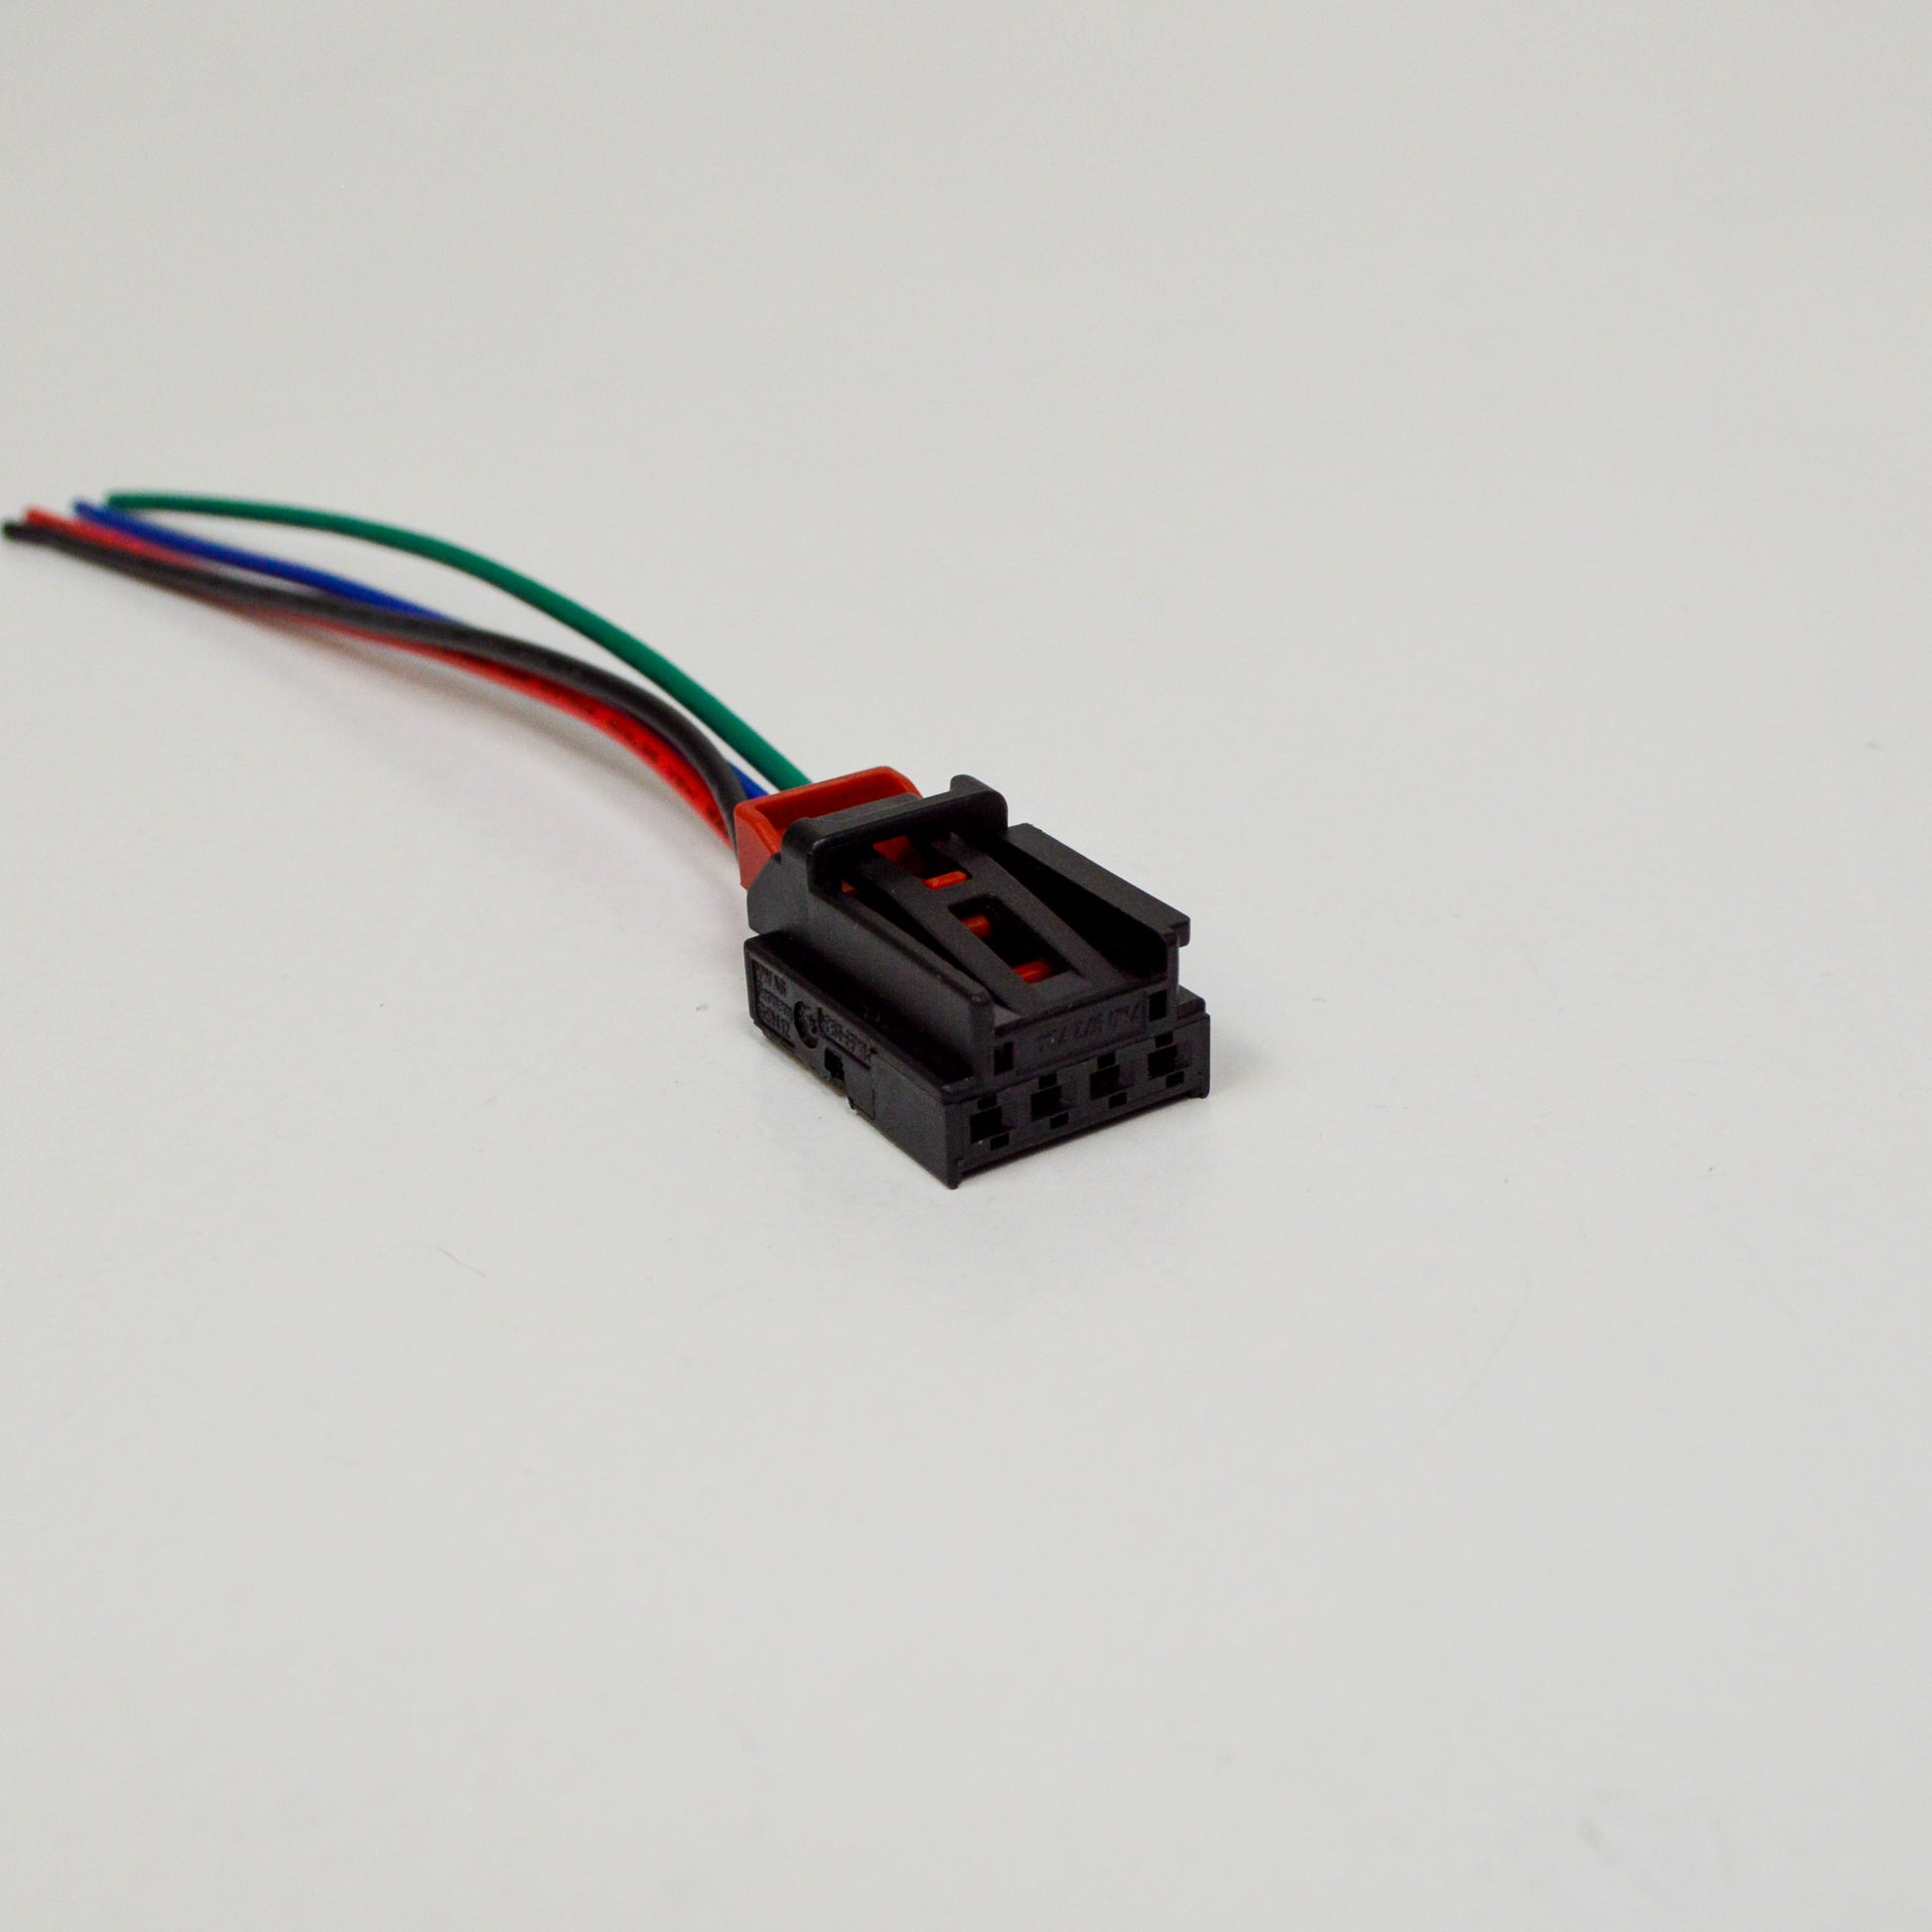 4-pin plug repair kit - flat contact housing with contact lock / inter